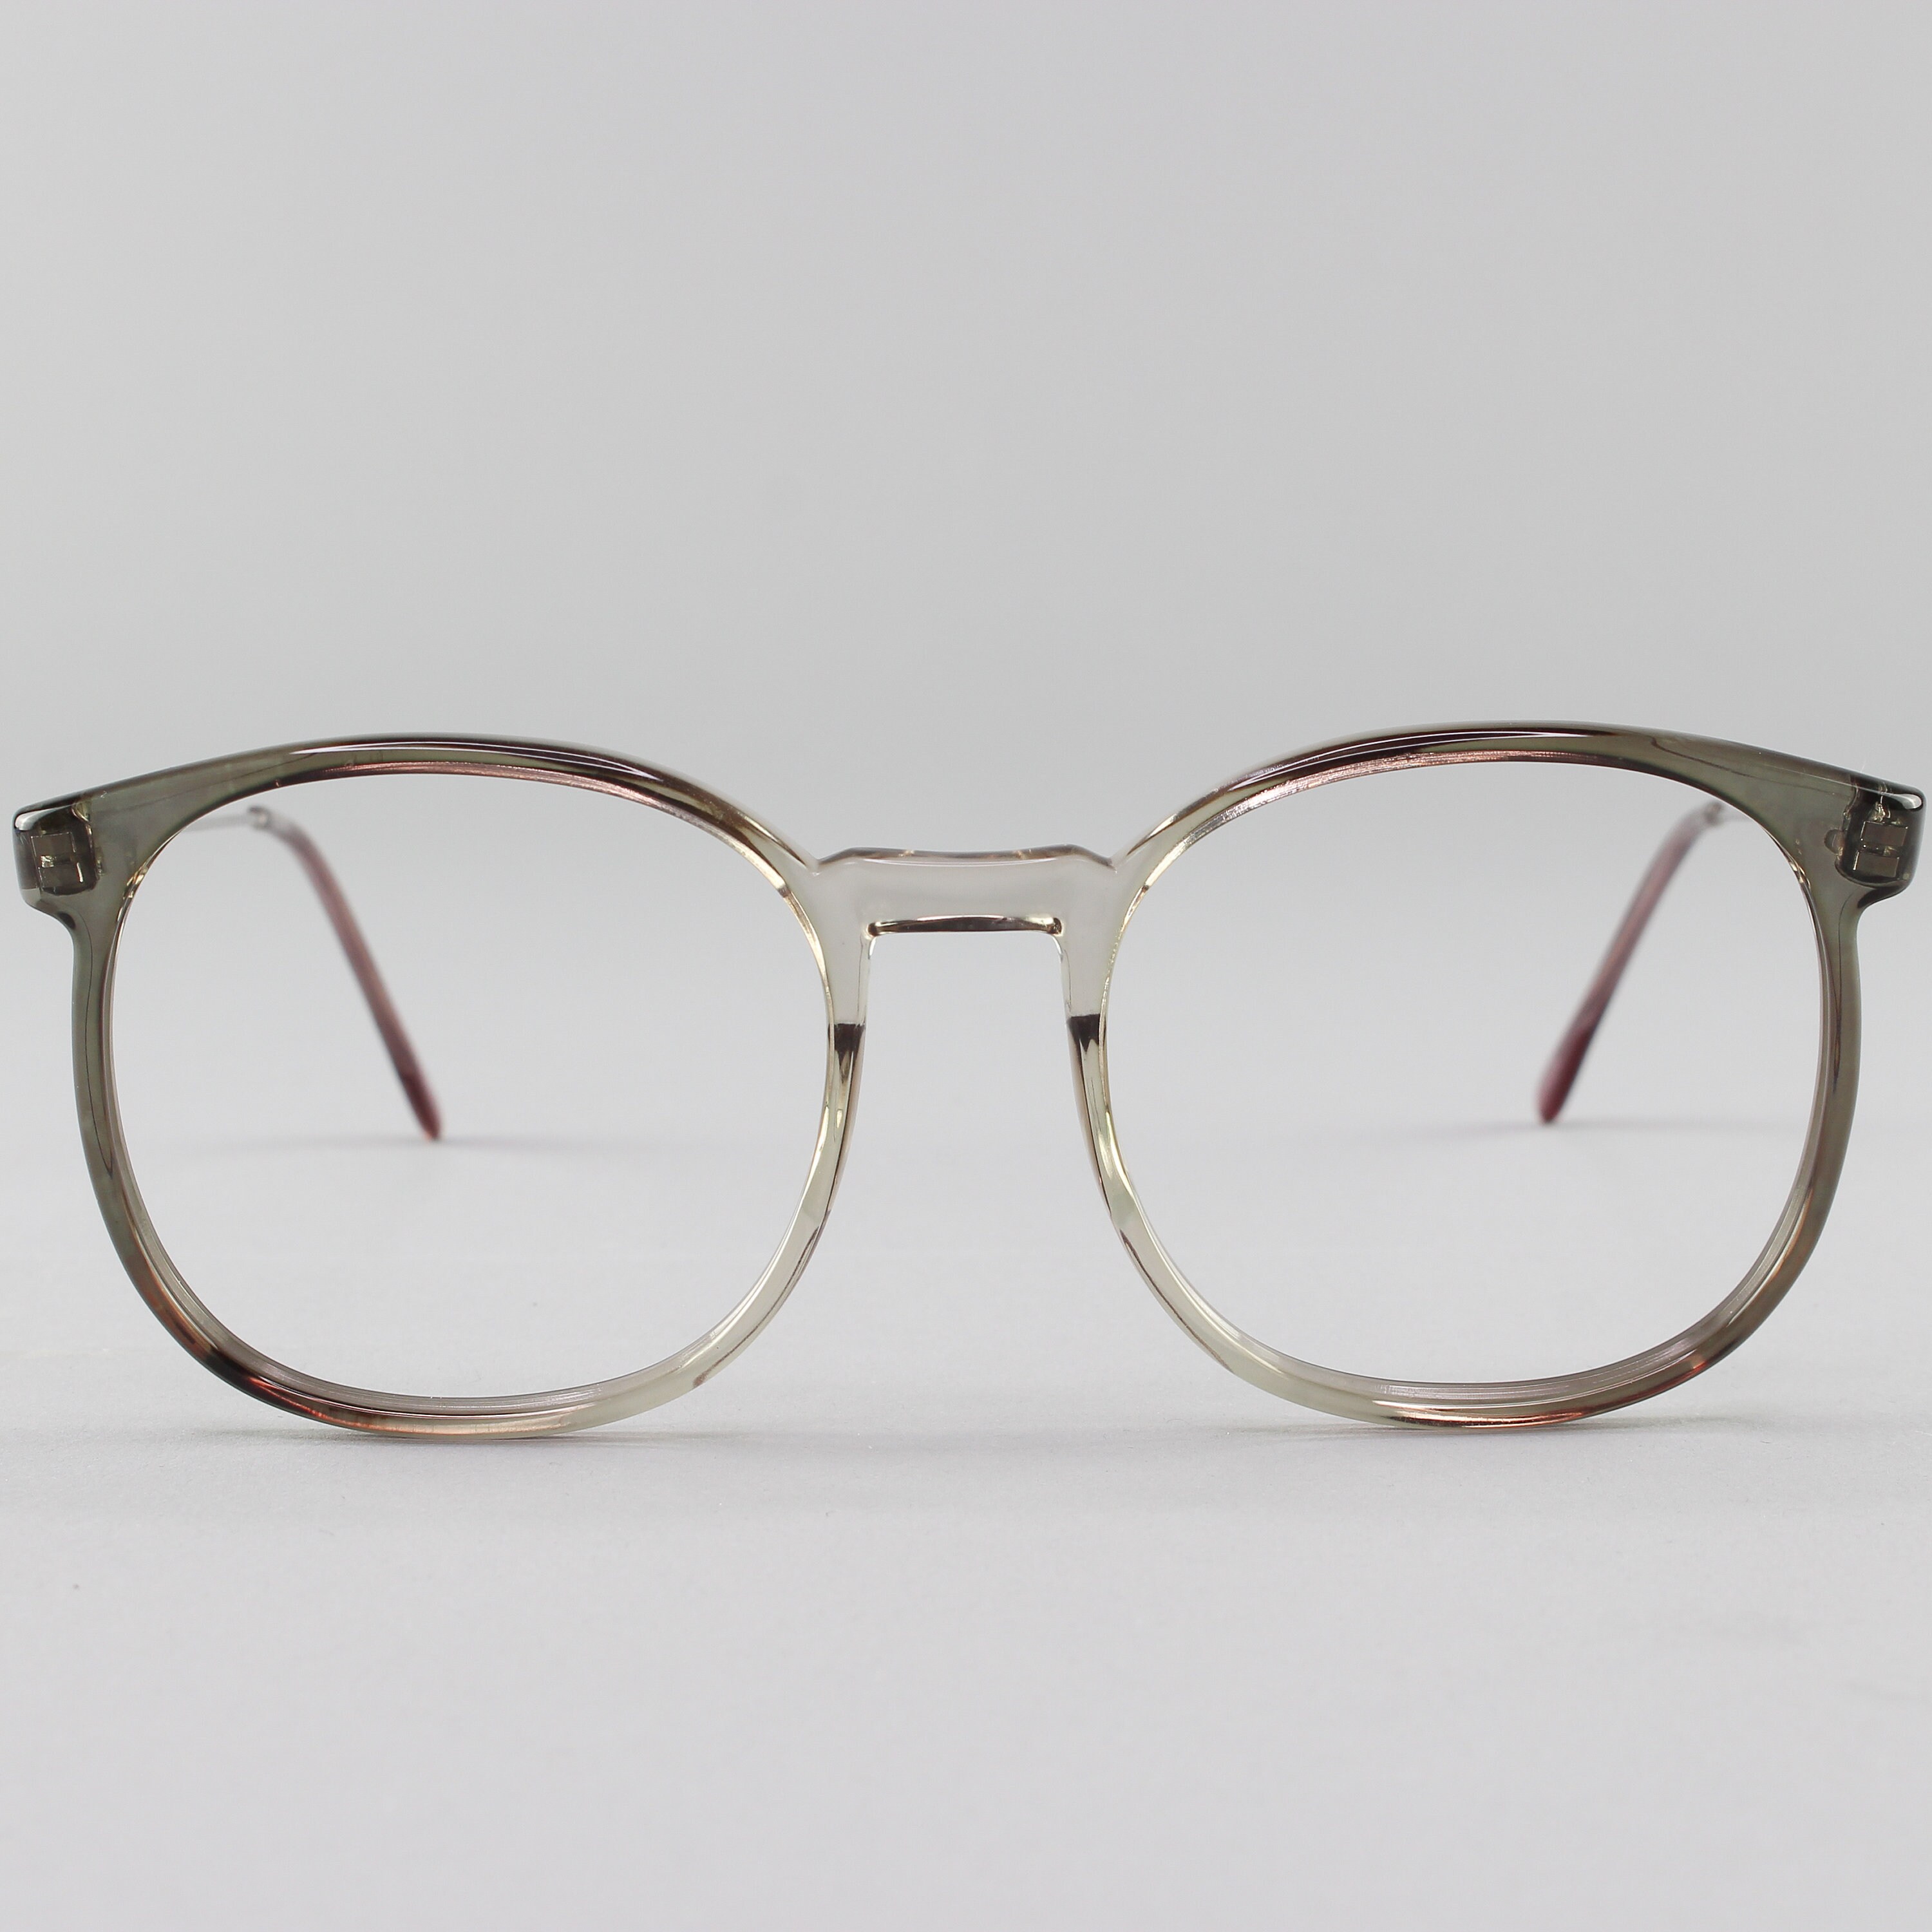 80s Vintage Glasses Clear Gray Round Eyeglass Frame 1980s Etsy